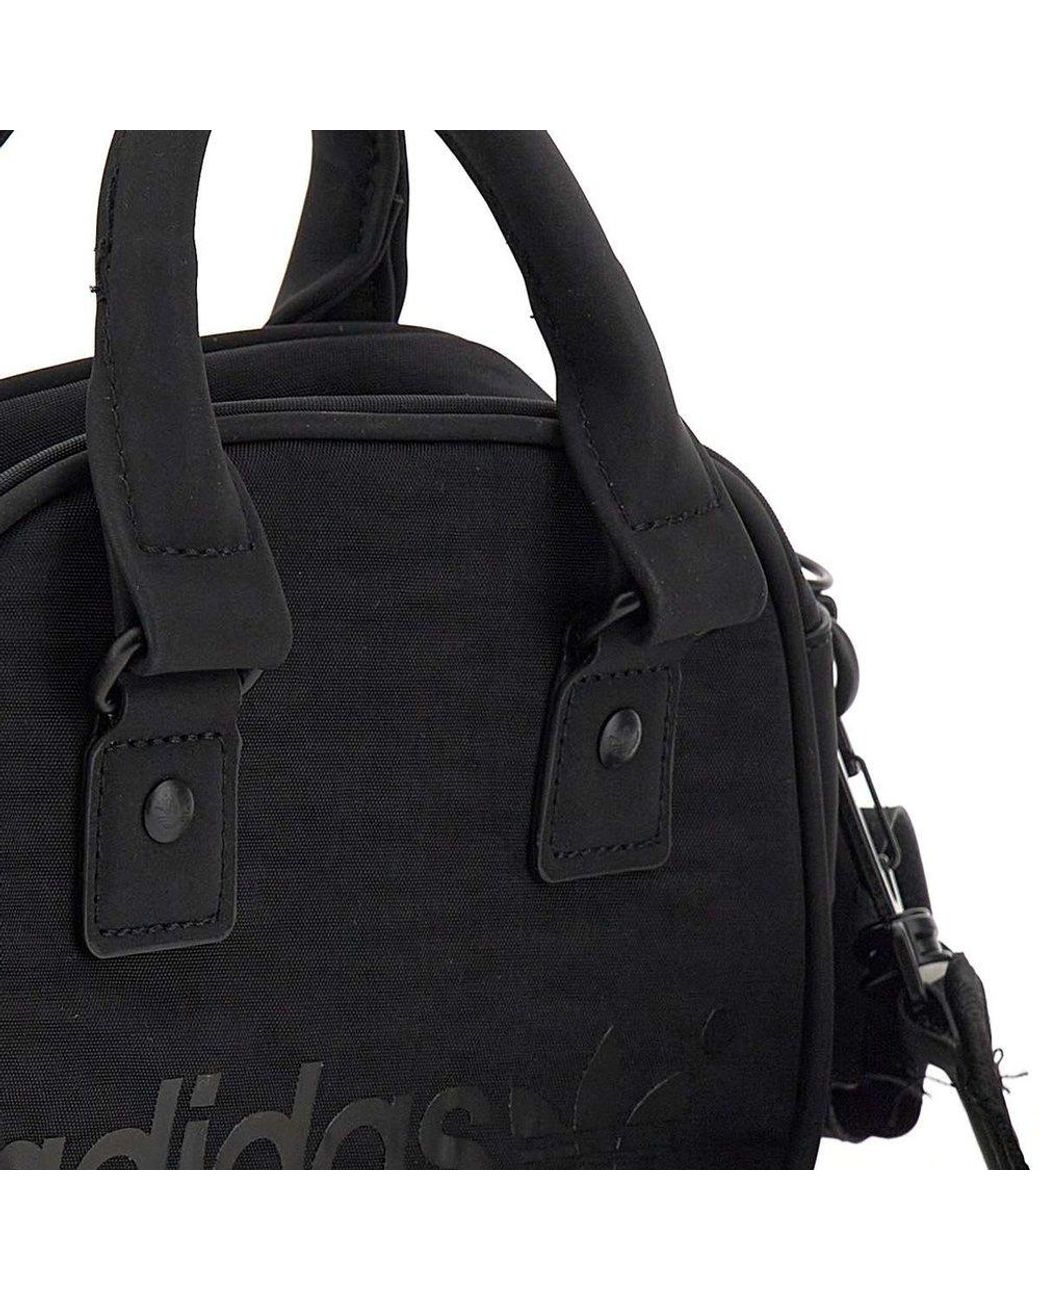 adidas Logo Printed Mini Bowling Bag in Black | Lyst